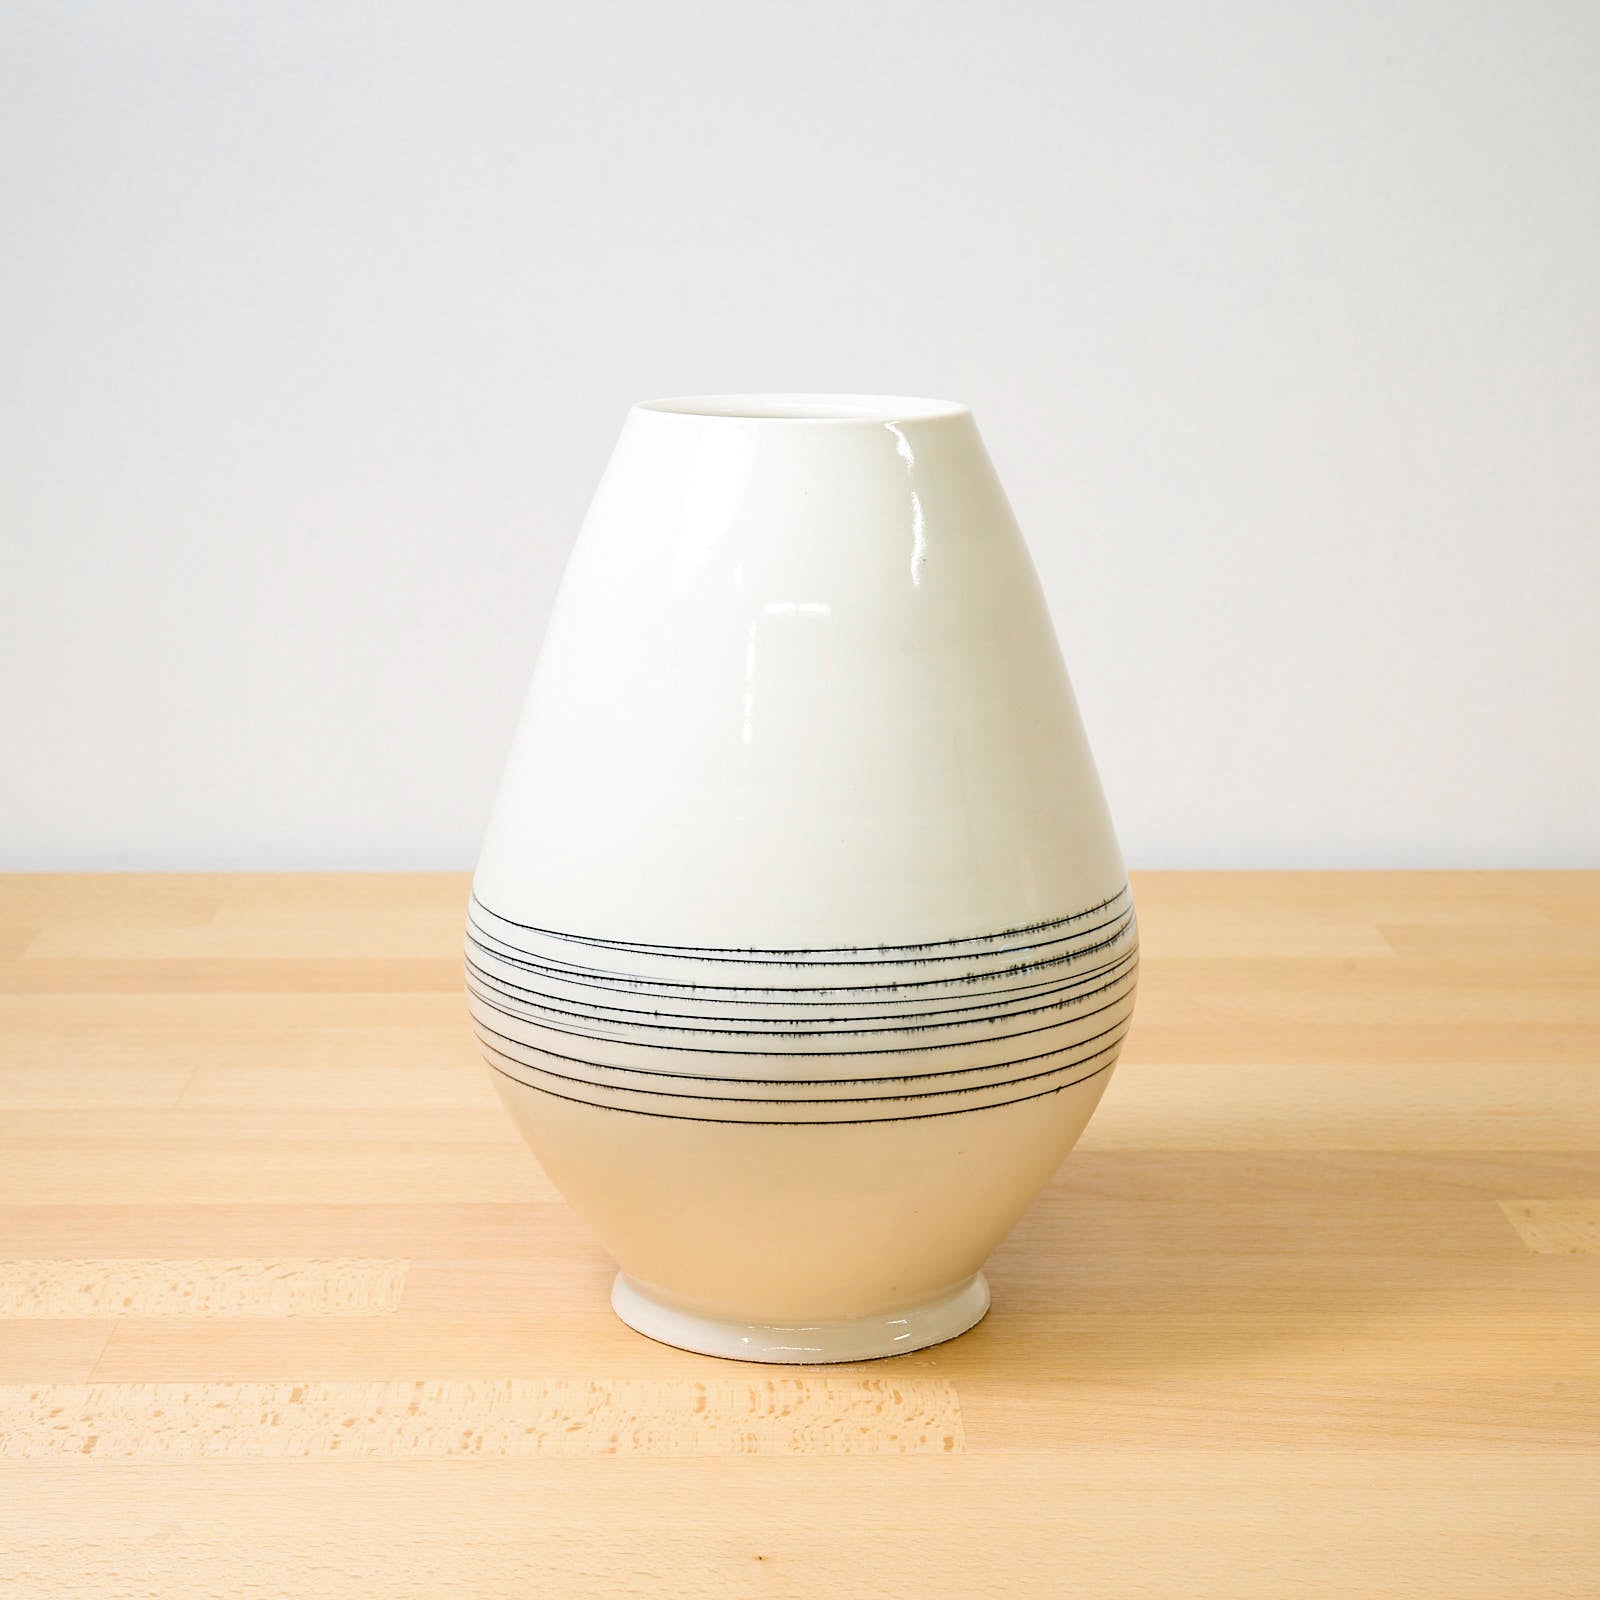 Ltd. Edition Vase 2022-021